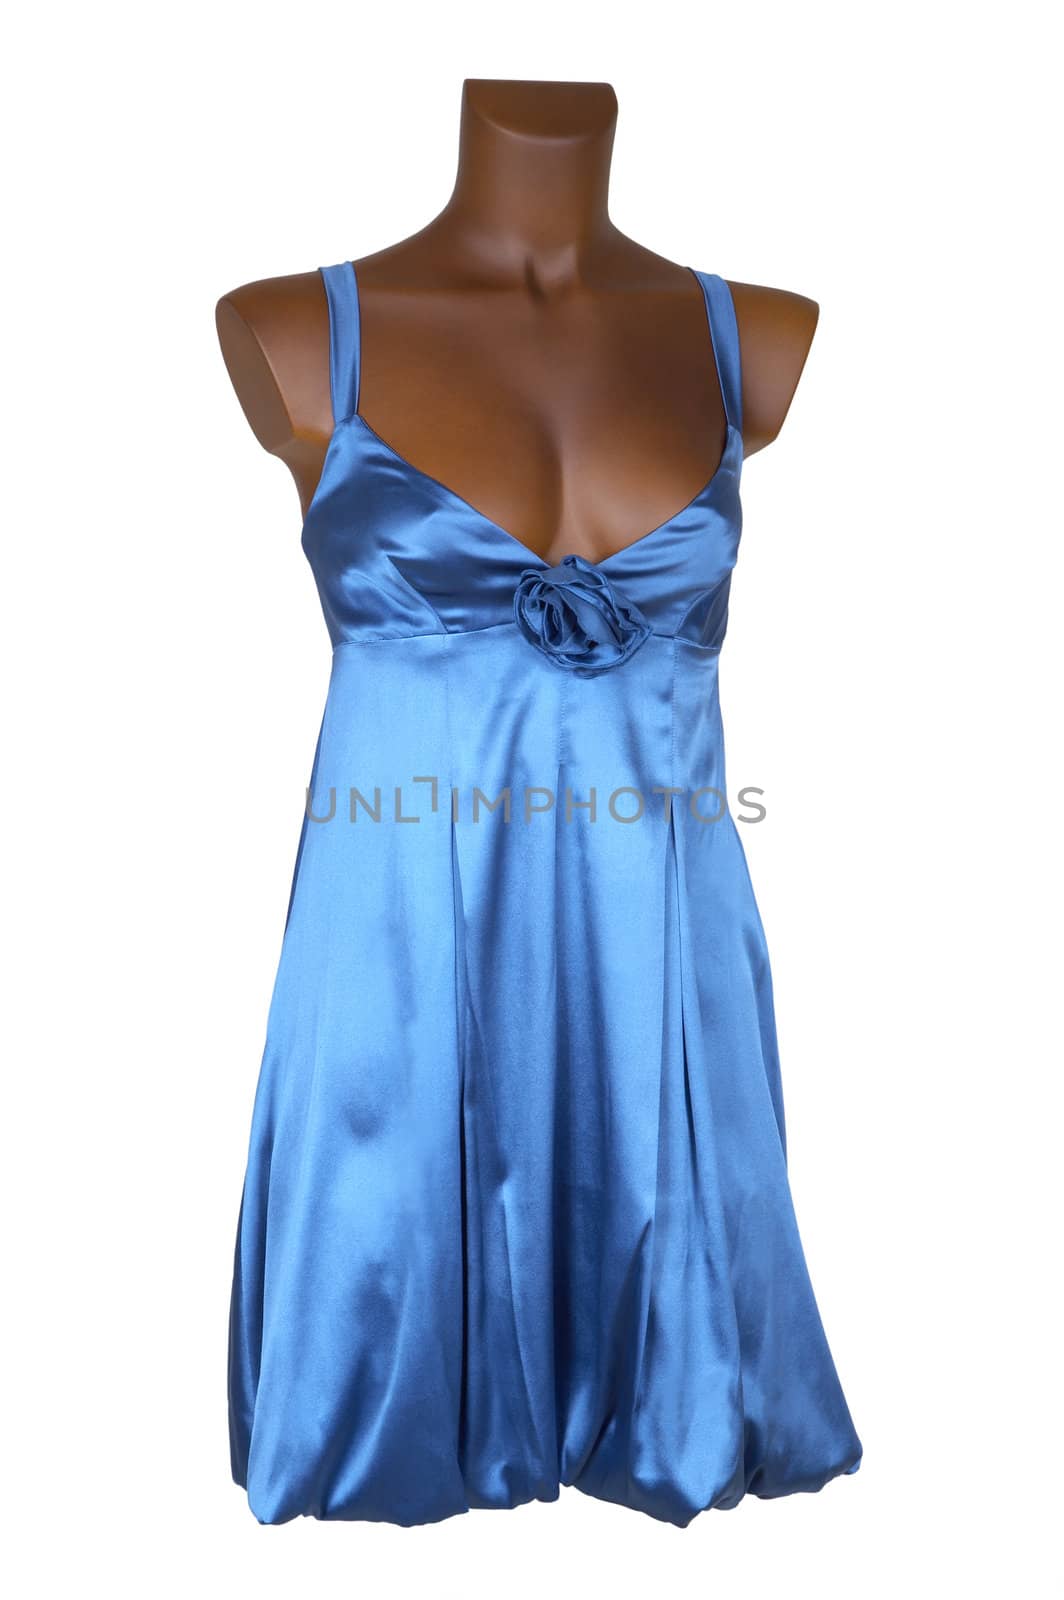 Blue silk dress by terex